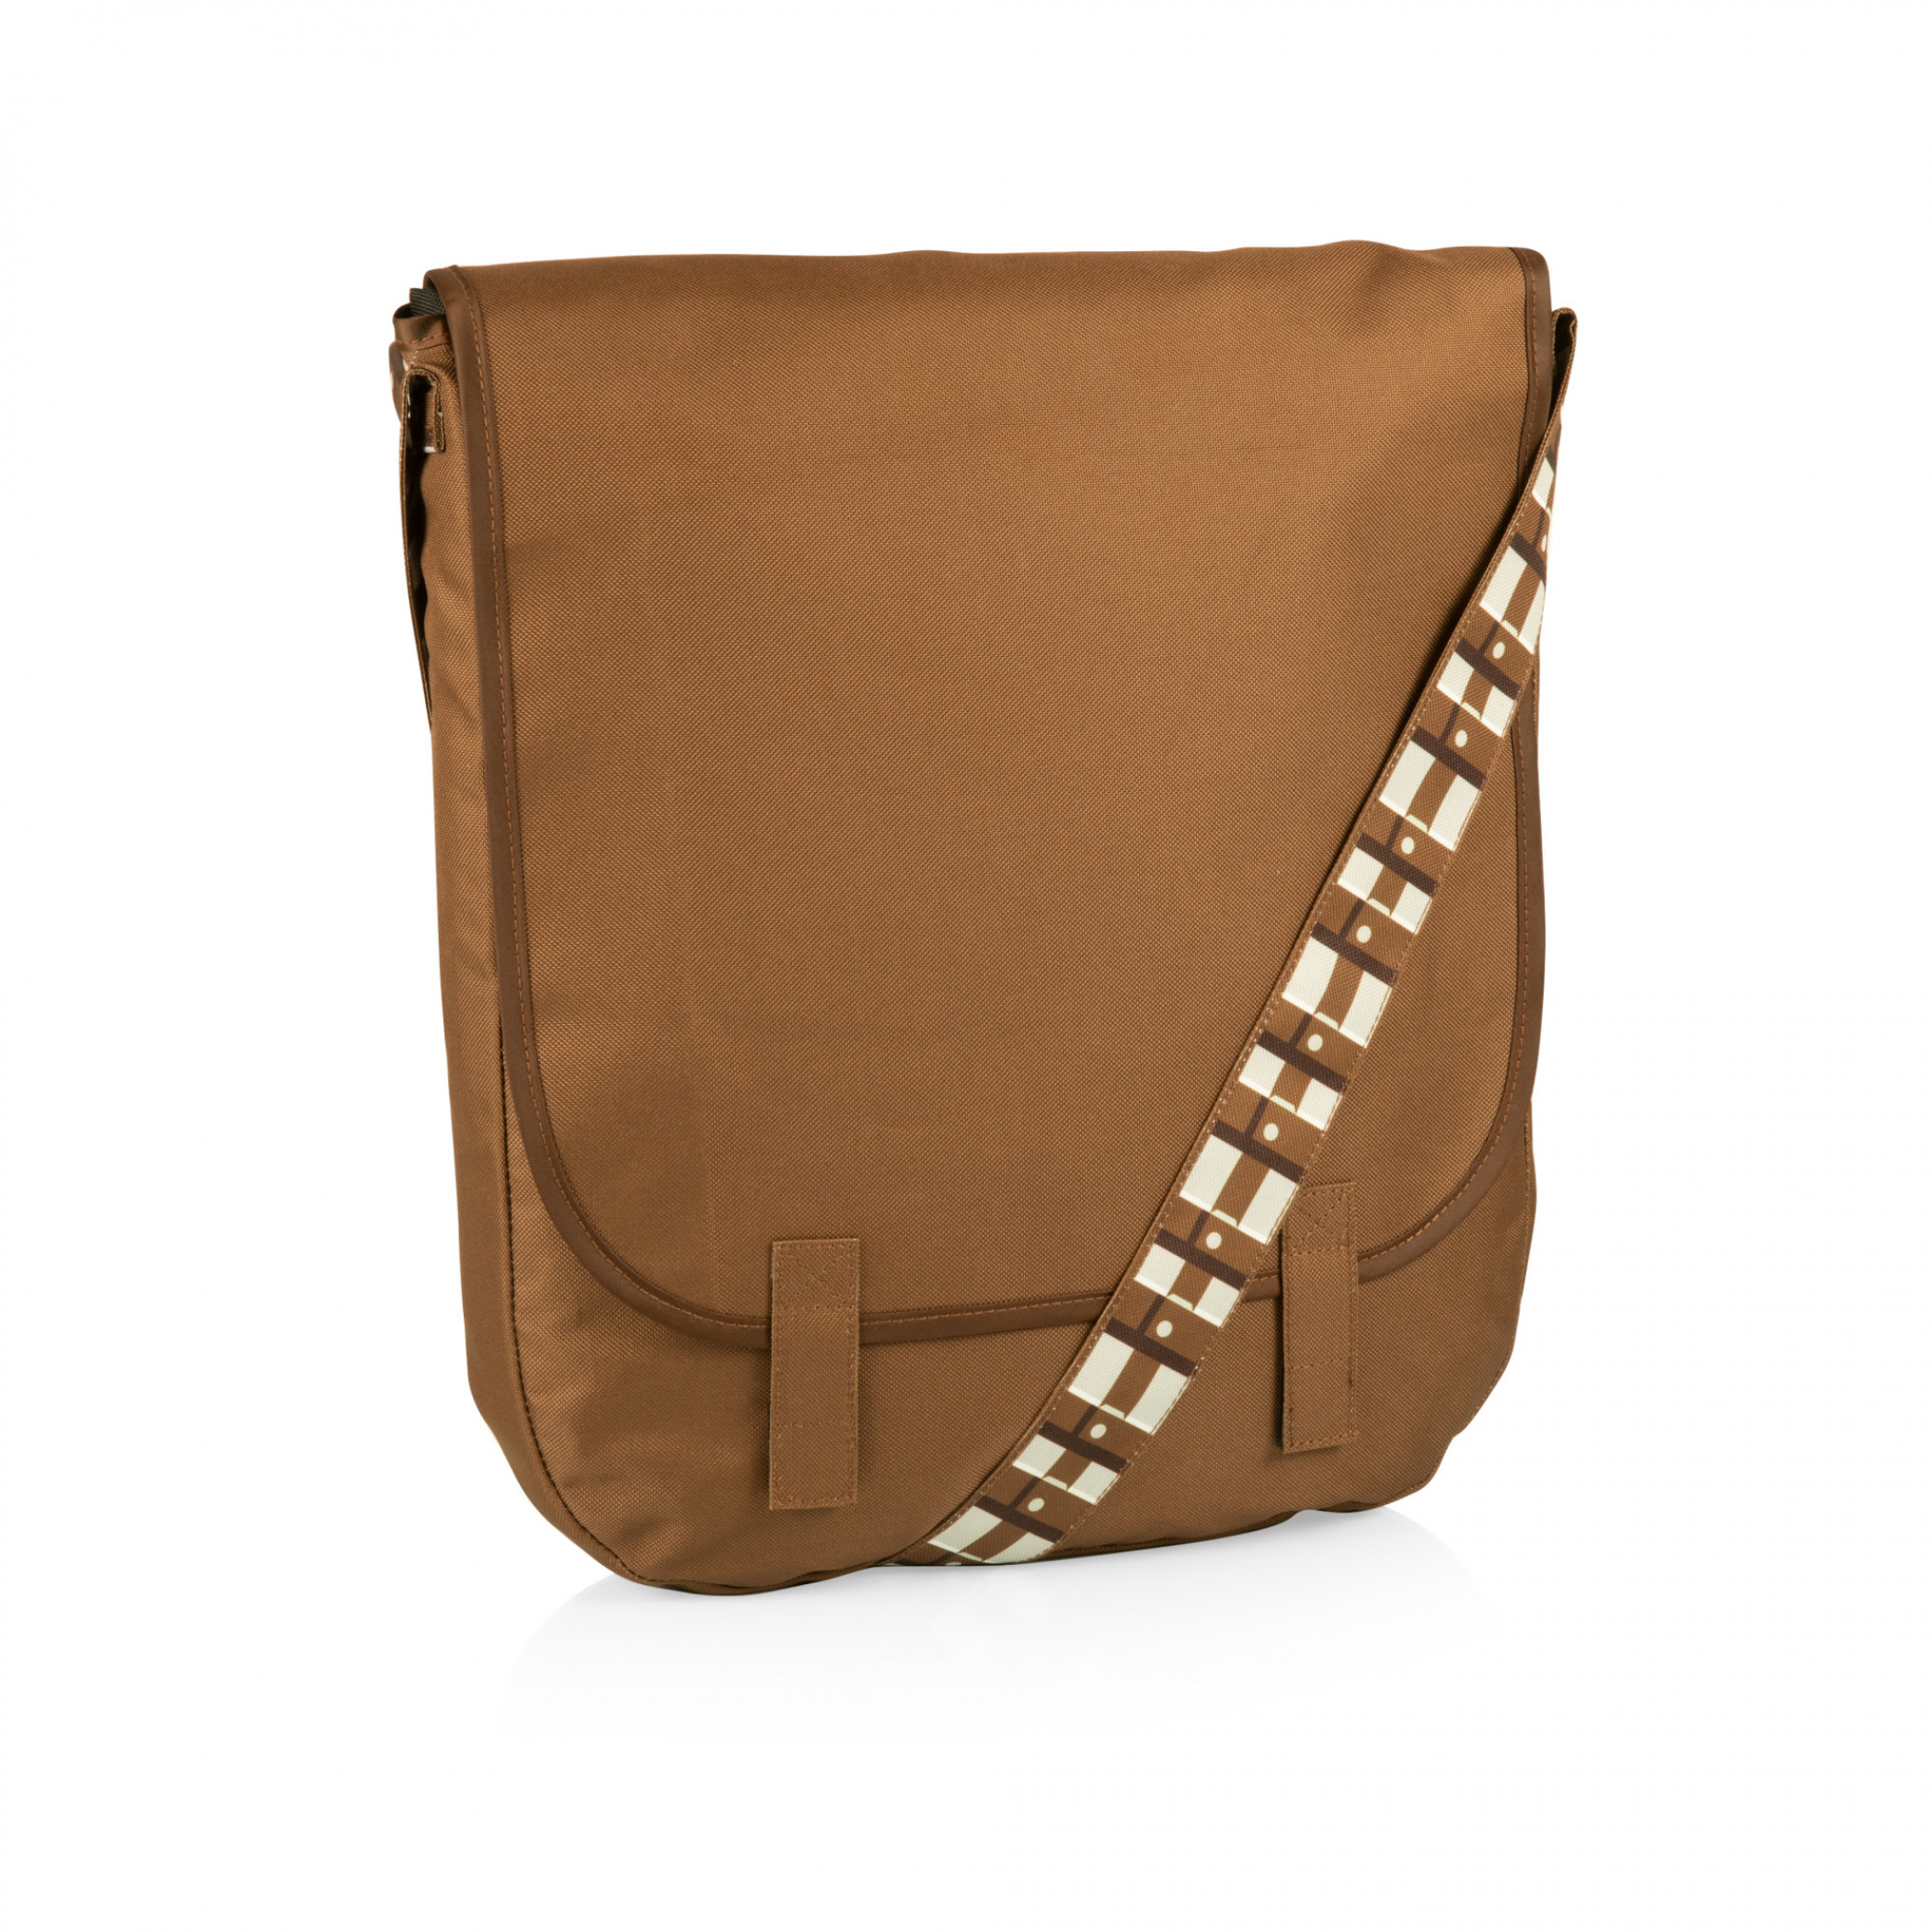 Star Wars Millennium Falcon Blanket In A Chewbacca Bag